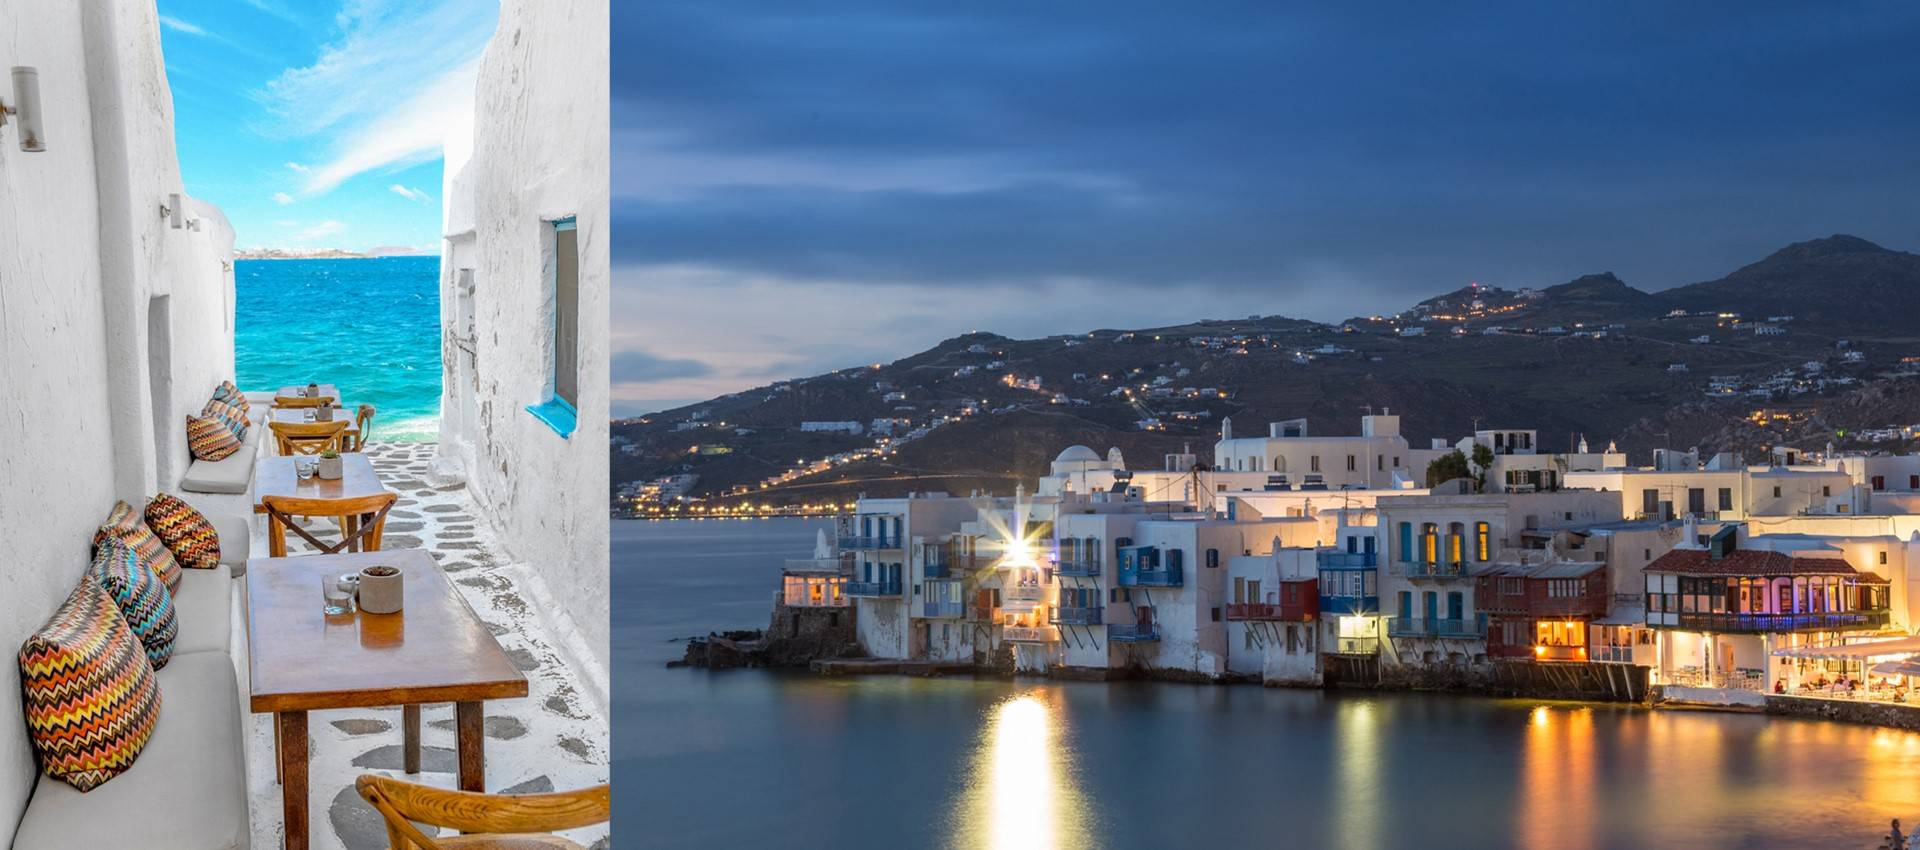 Luxury destination weddings and wedding parties in Myconos by Bond wedding planner in Greece